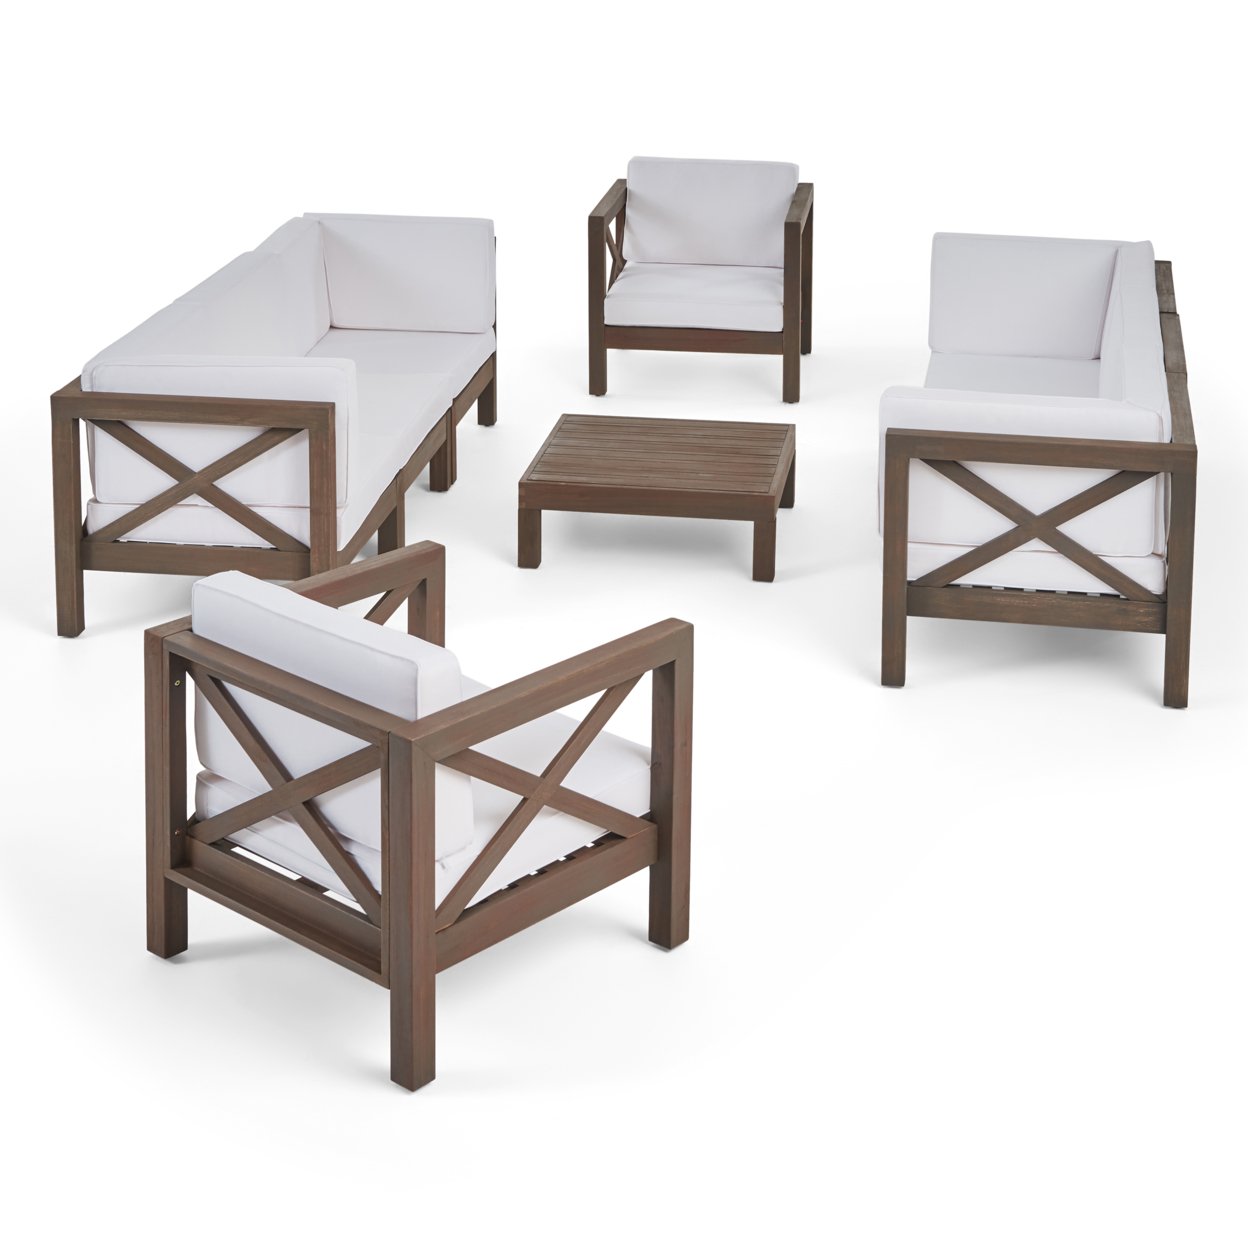 Morgan Outdoor 8 Seater Acacia Wood Sofa and Club Chair Set - gray finish + white